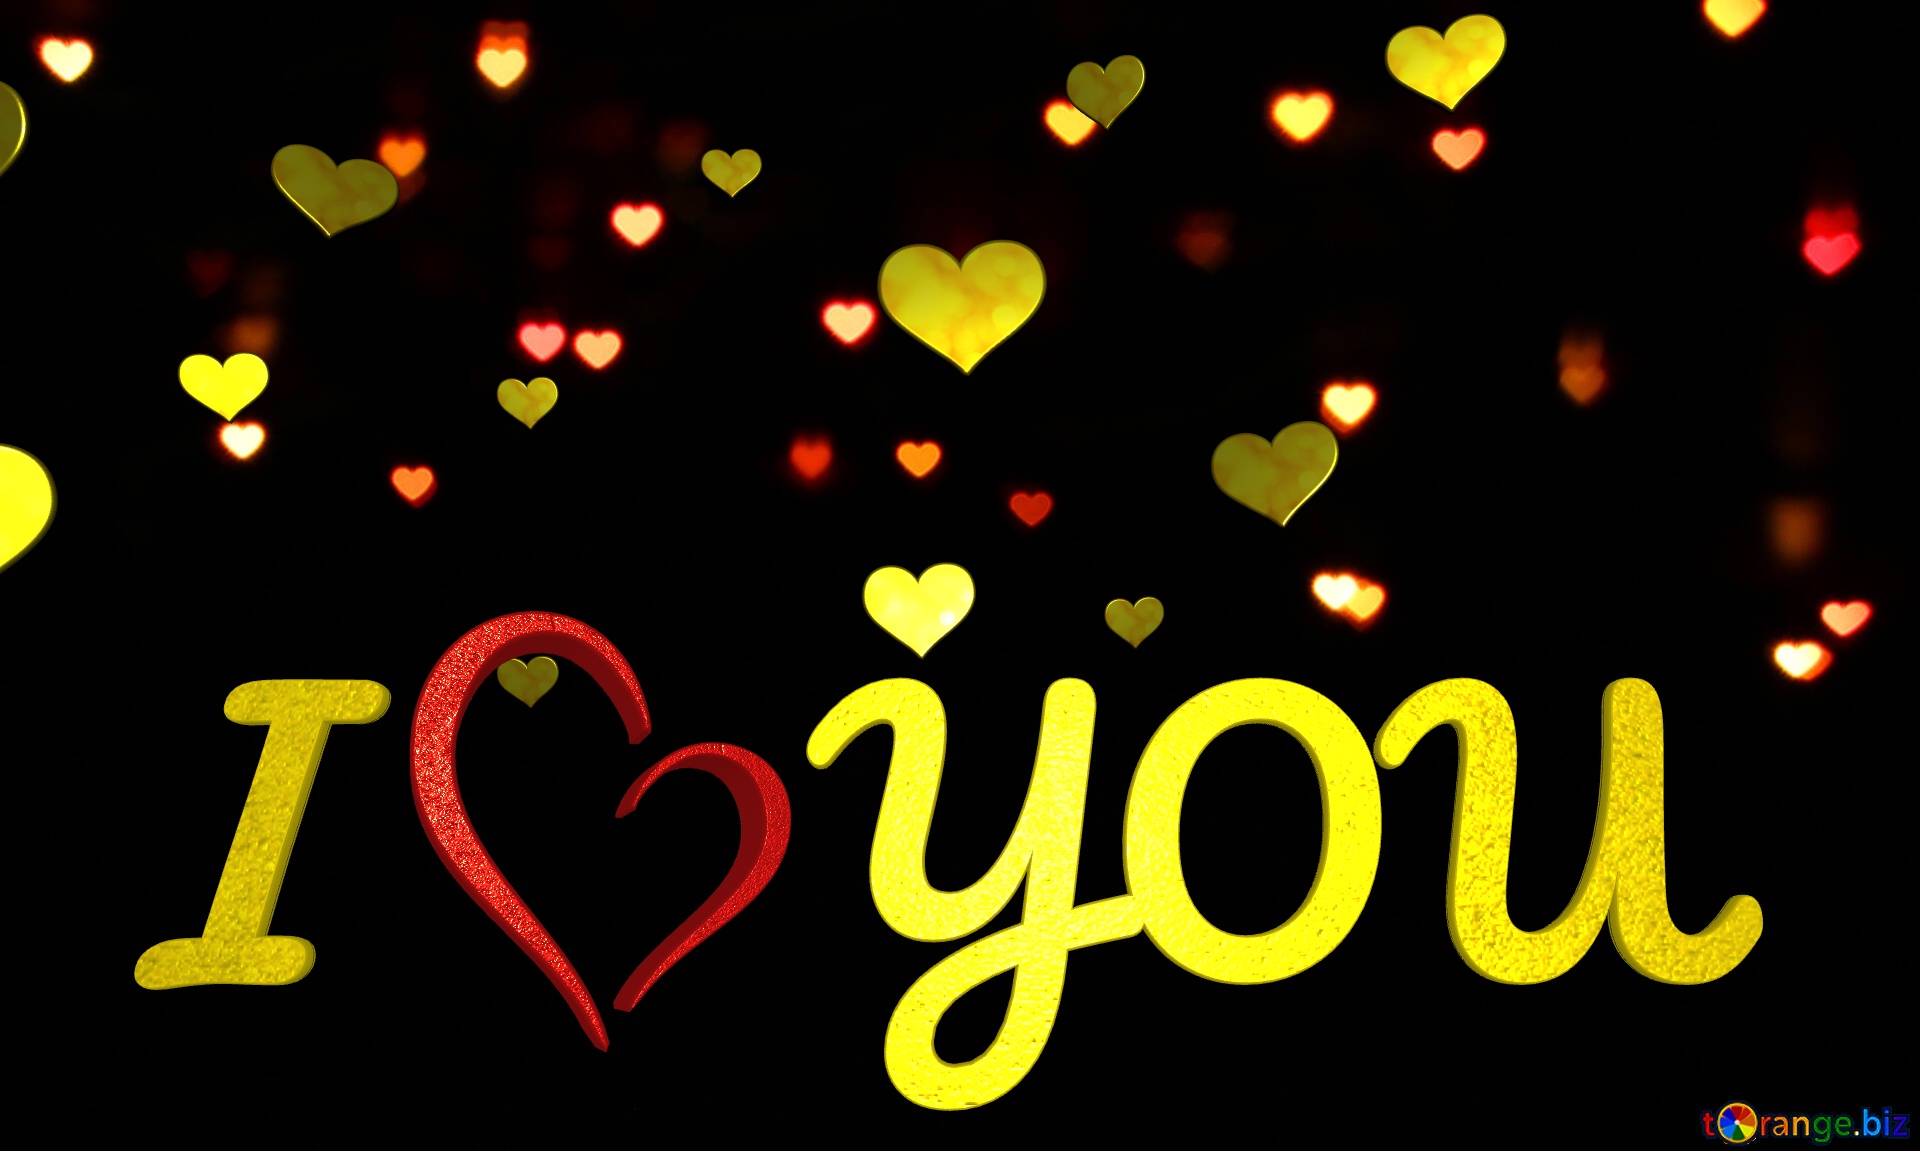 Hearts i love you Lights hearts on dark background №37845